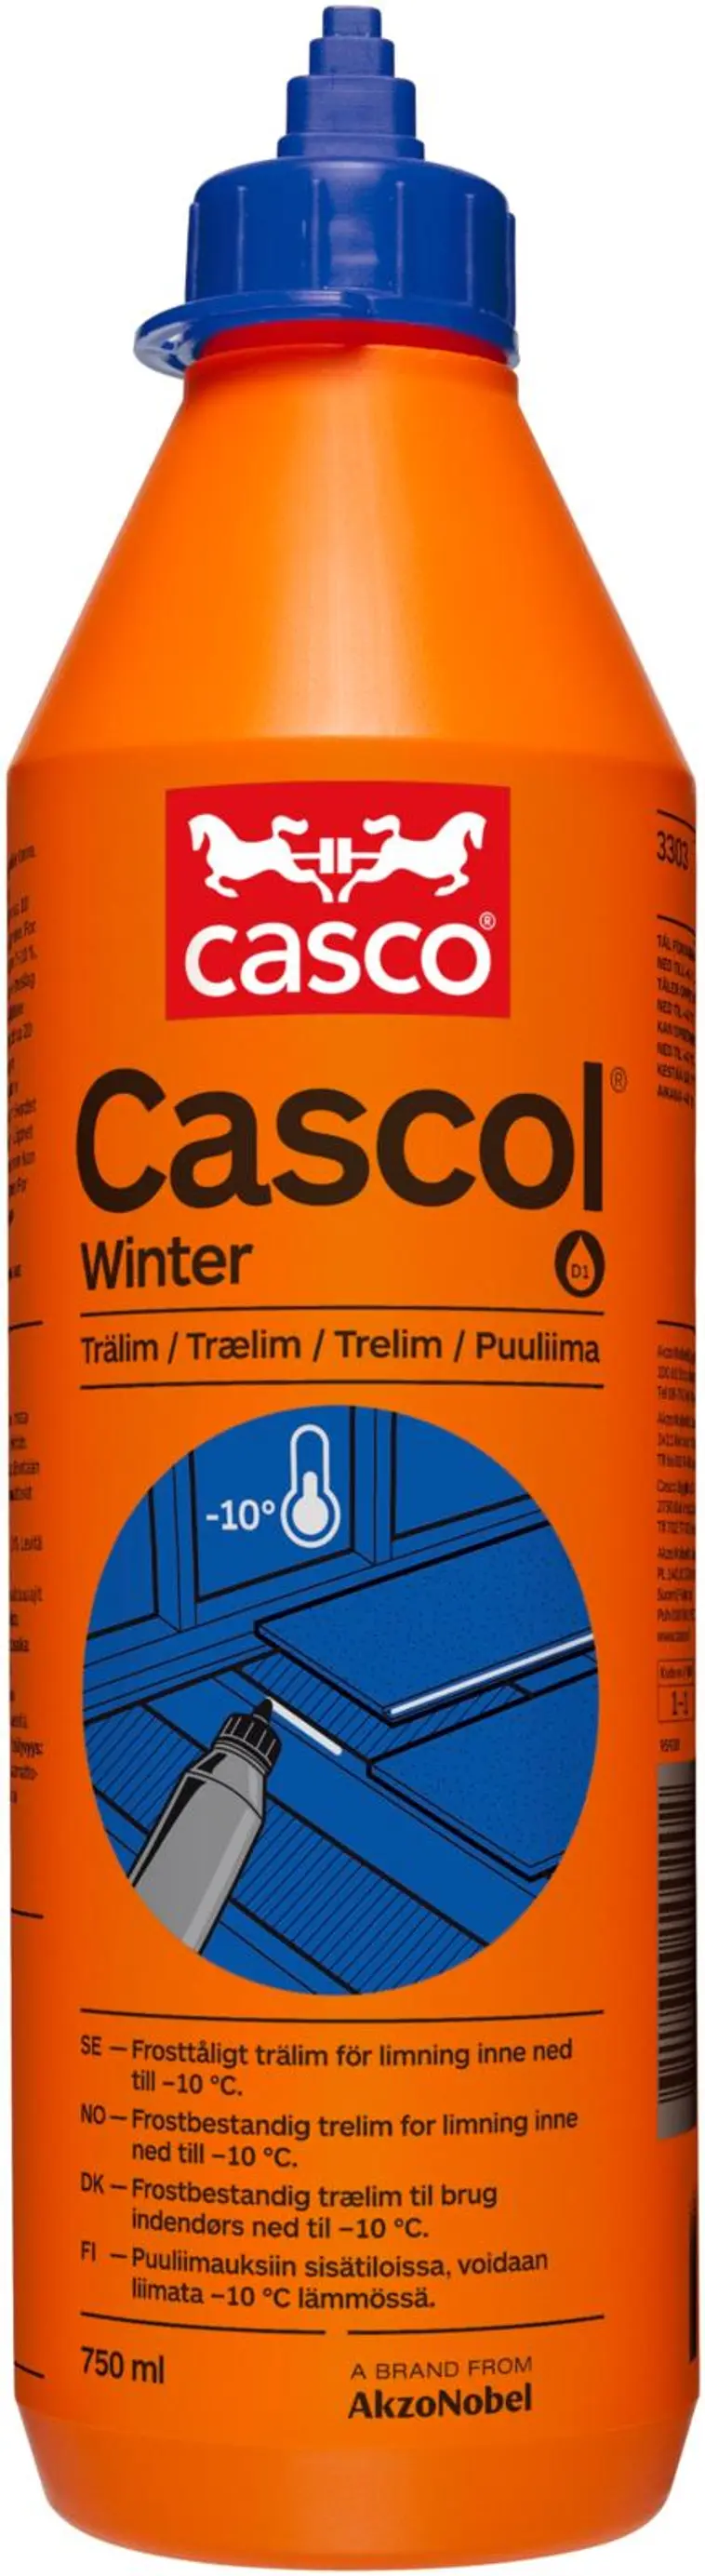 Casco Cascol Winter talviliima 750 ml